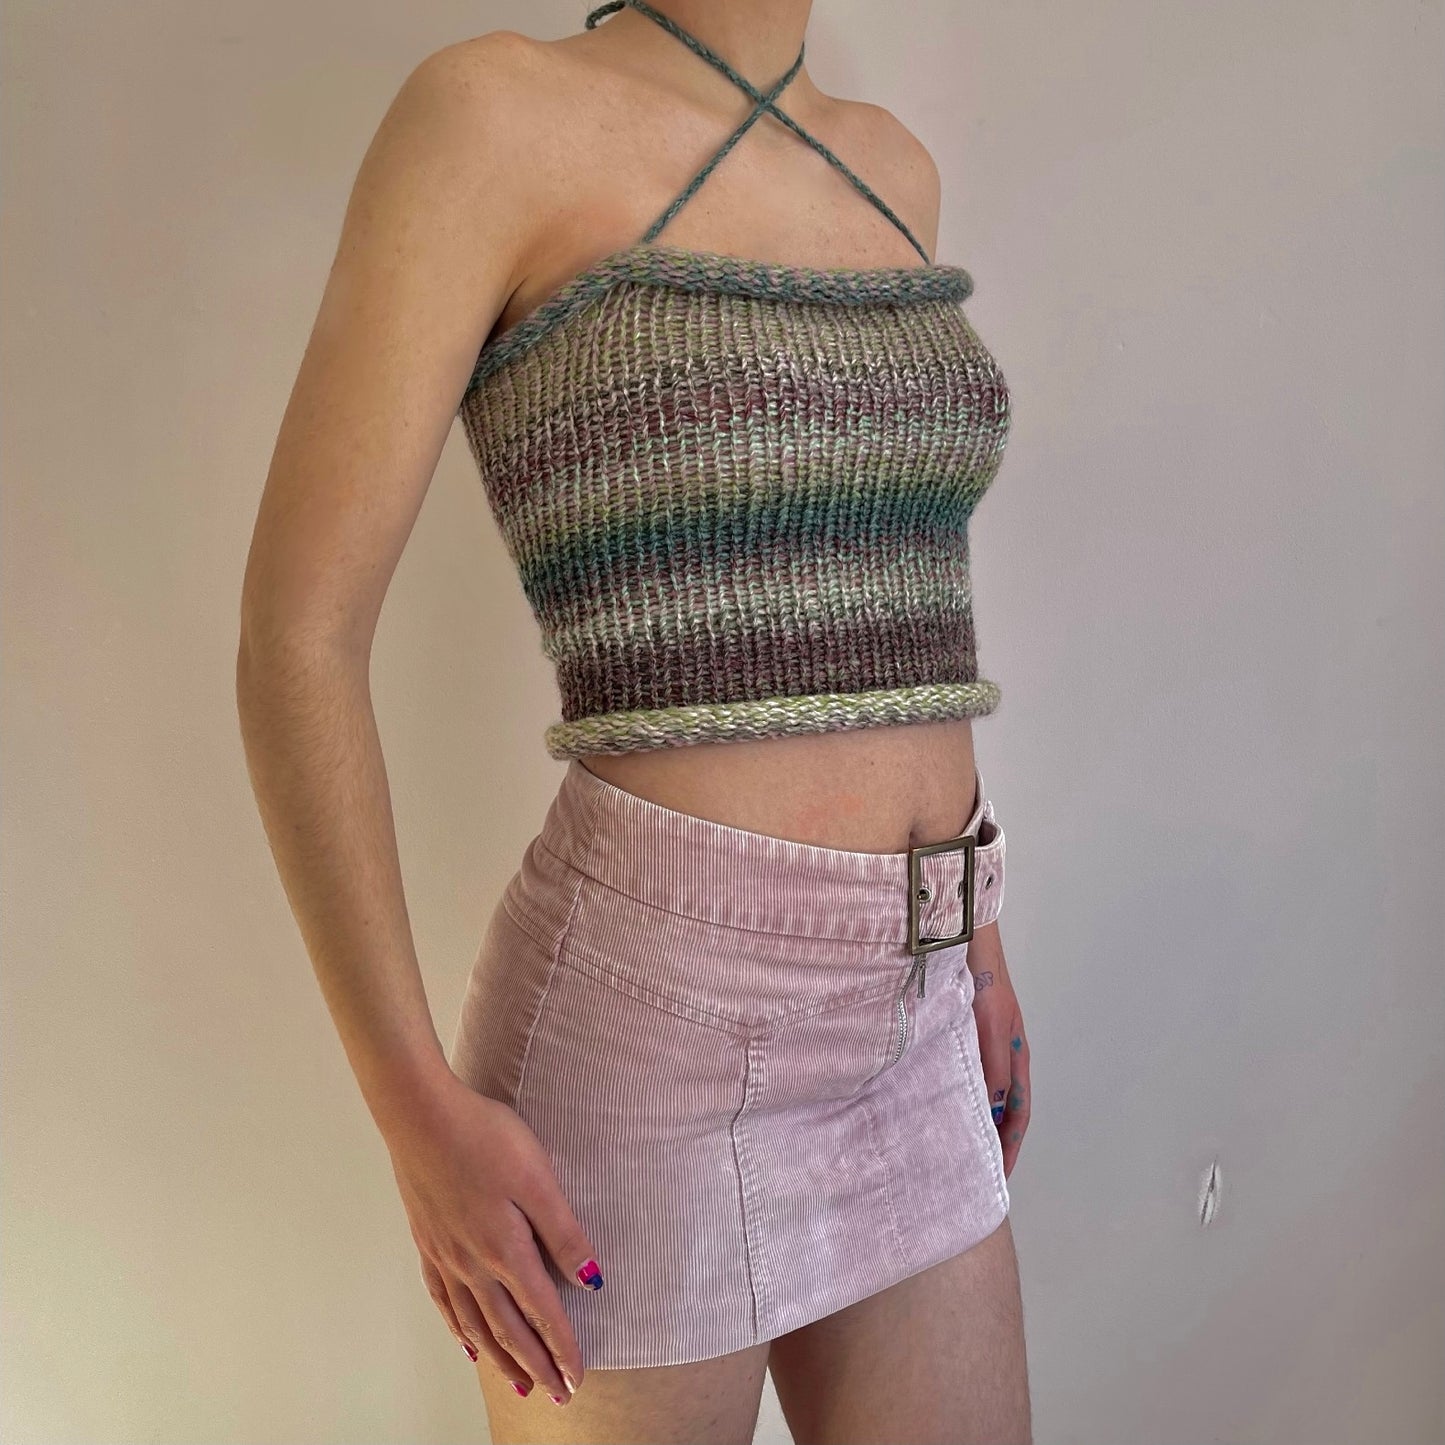 Handmade knitted criss cross halter top in dusky shades